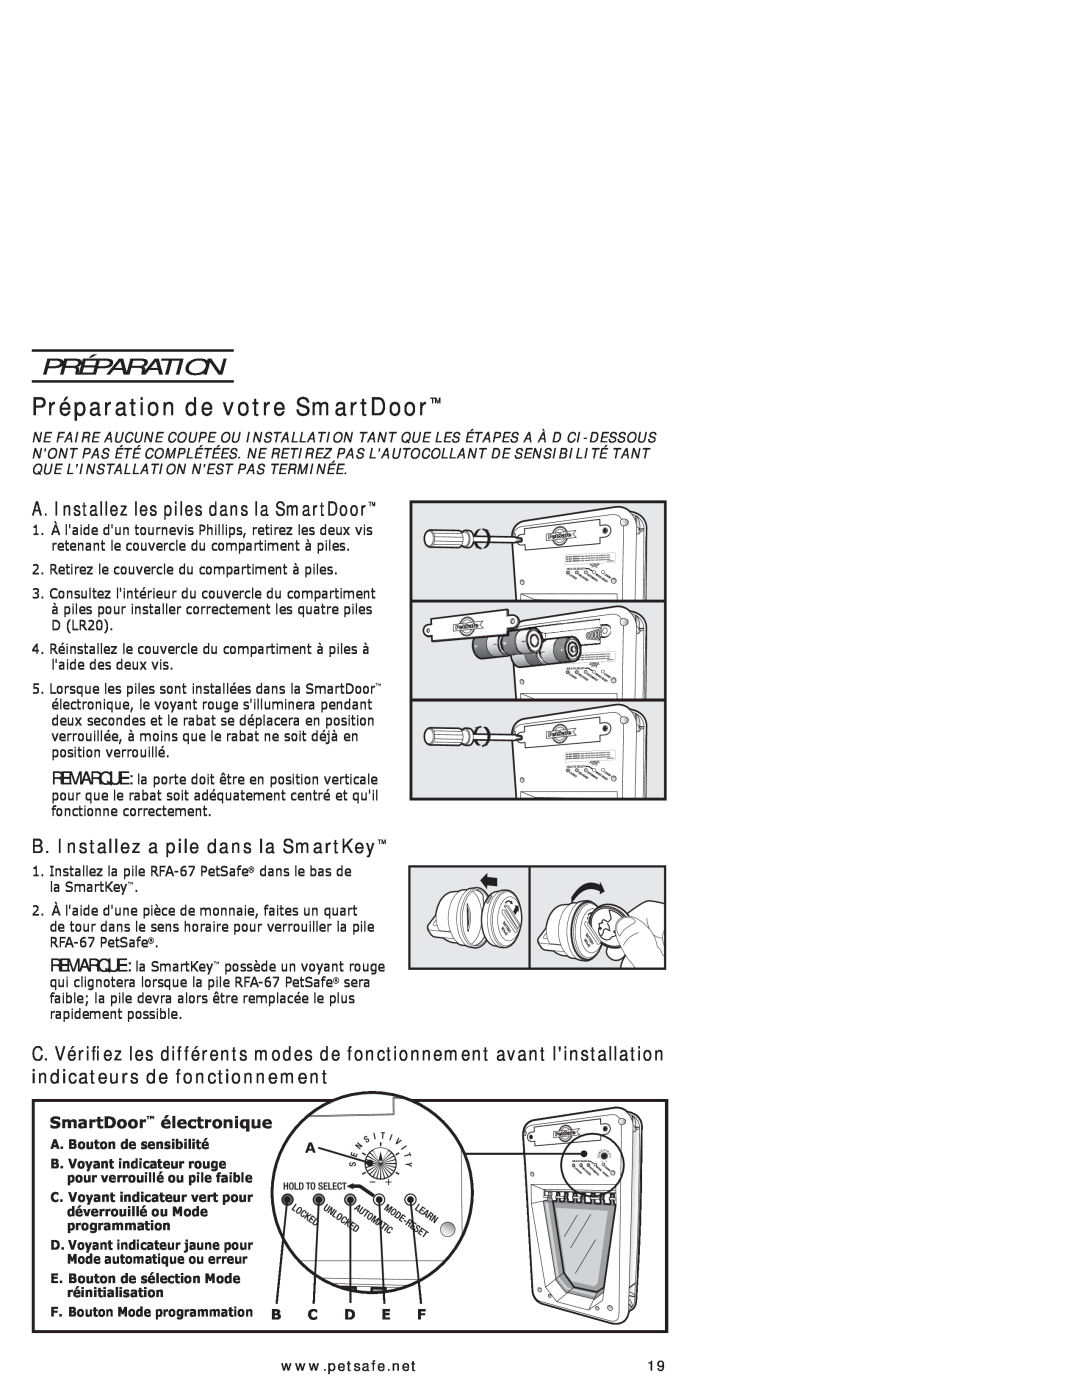 Petsafe PPA11-10709 manual Préparation de votre SmartDoor, A. Installez les piles dans la SmartDoor, SmartDoor électronique 